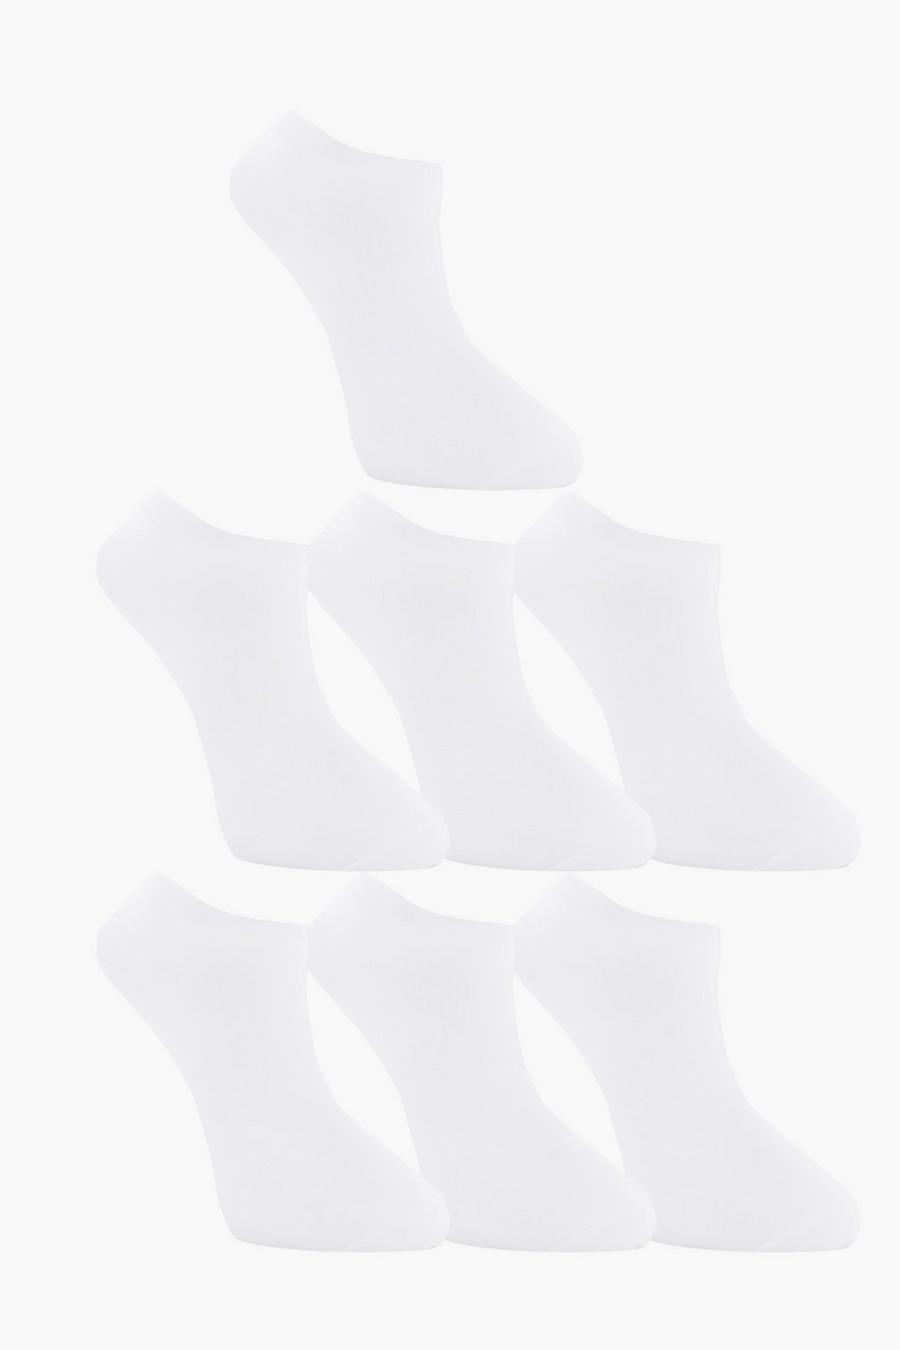 Pack de 7 calcetines de deporte blancos lisos image number 1